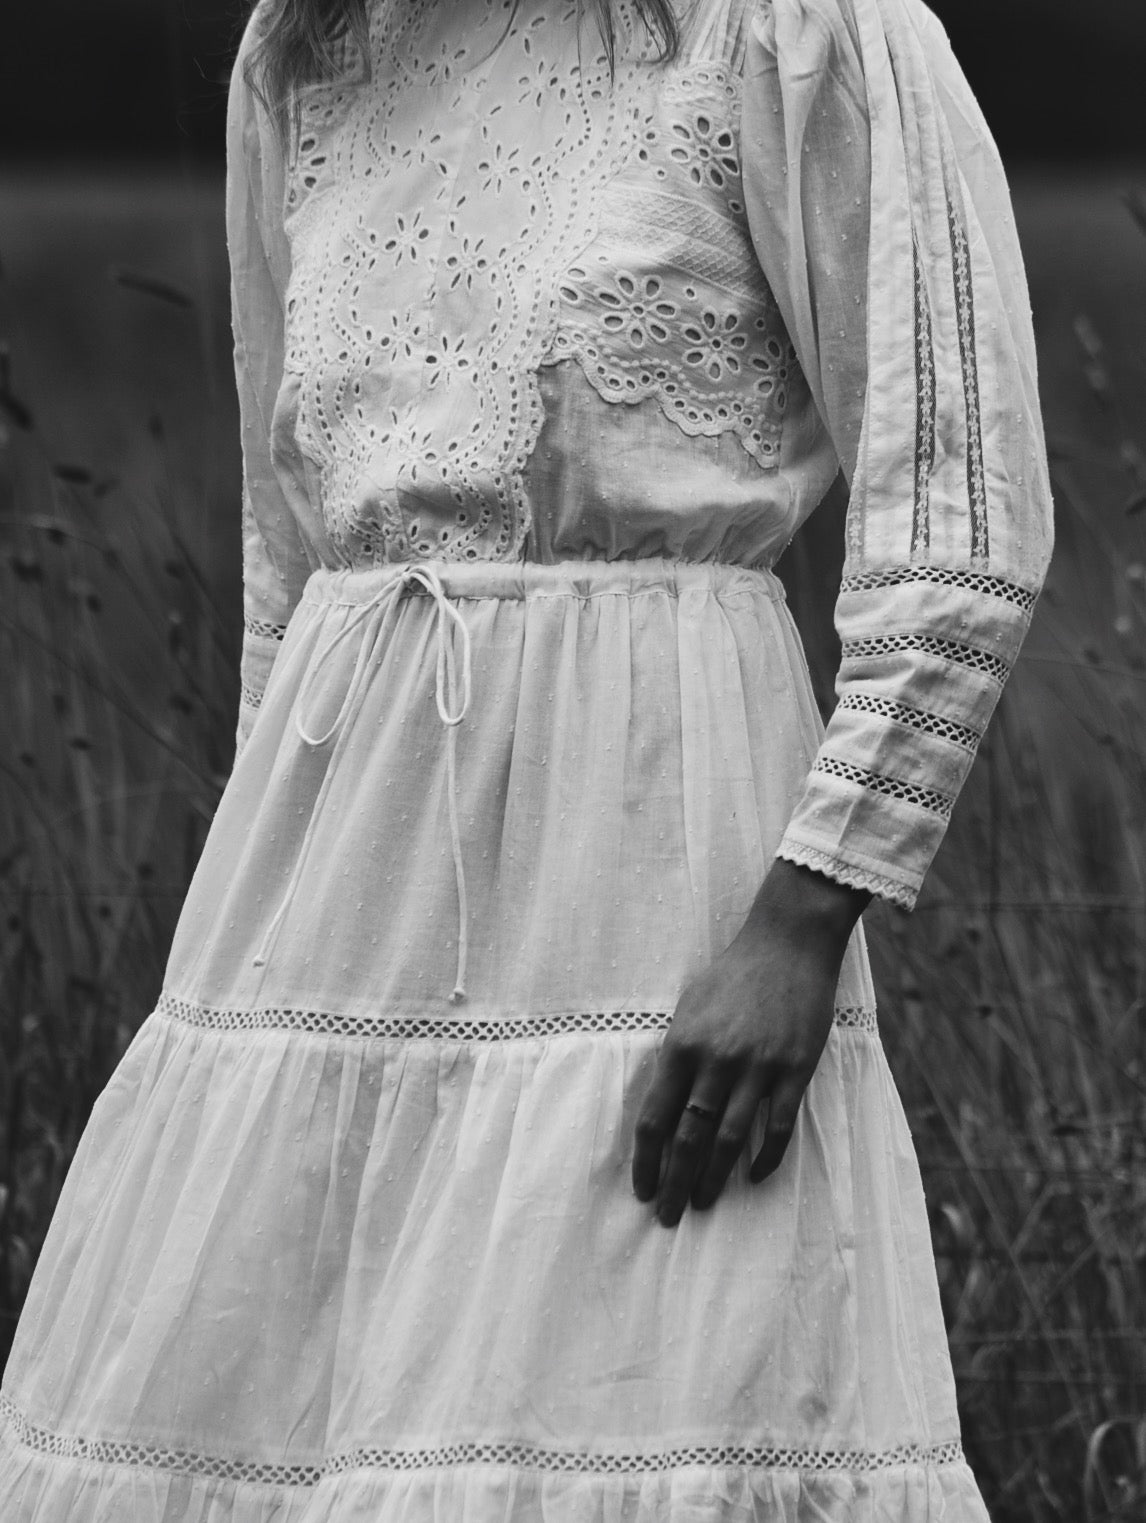 SAINSBURY COTTON LACE DRESS WHITE